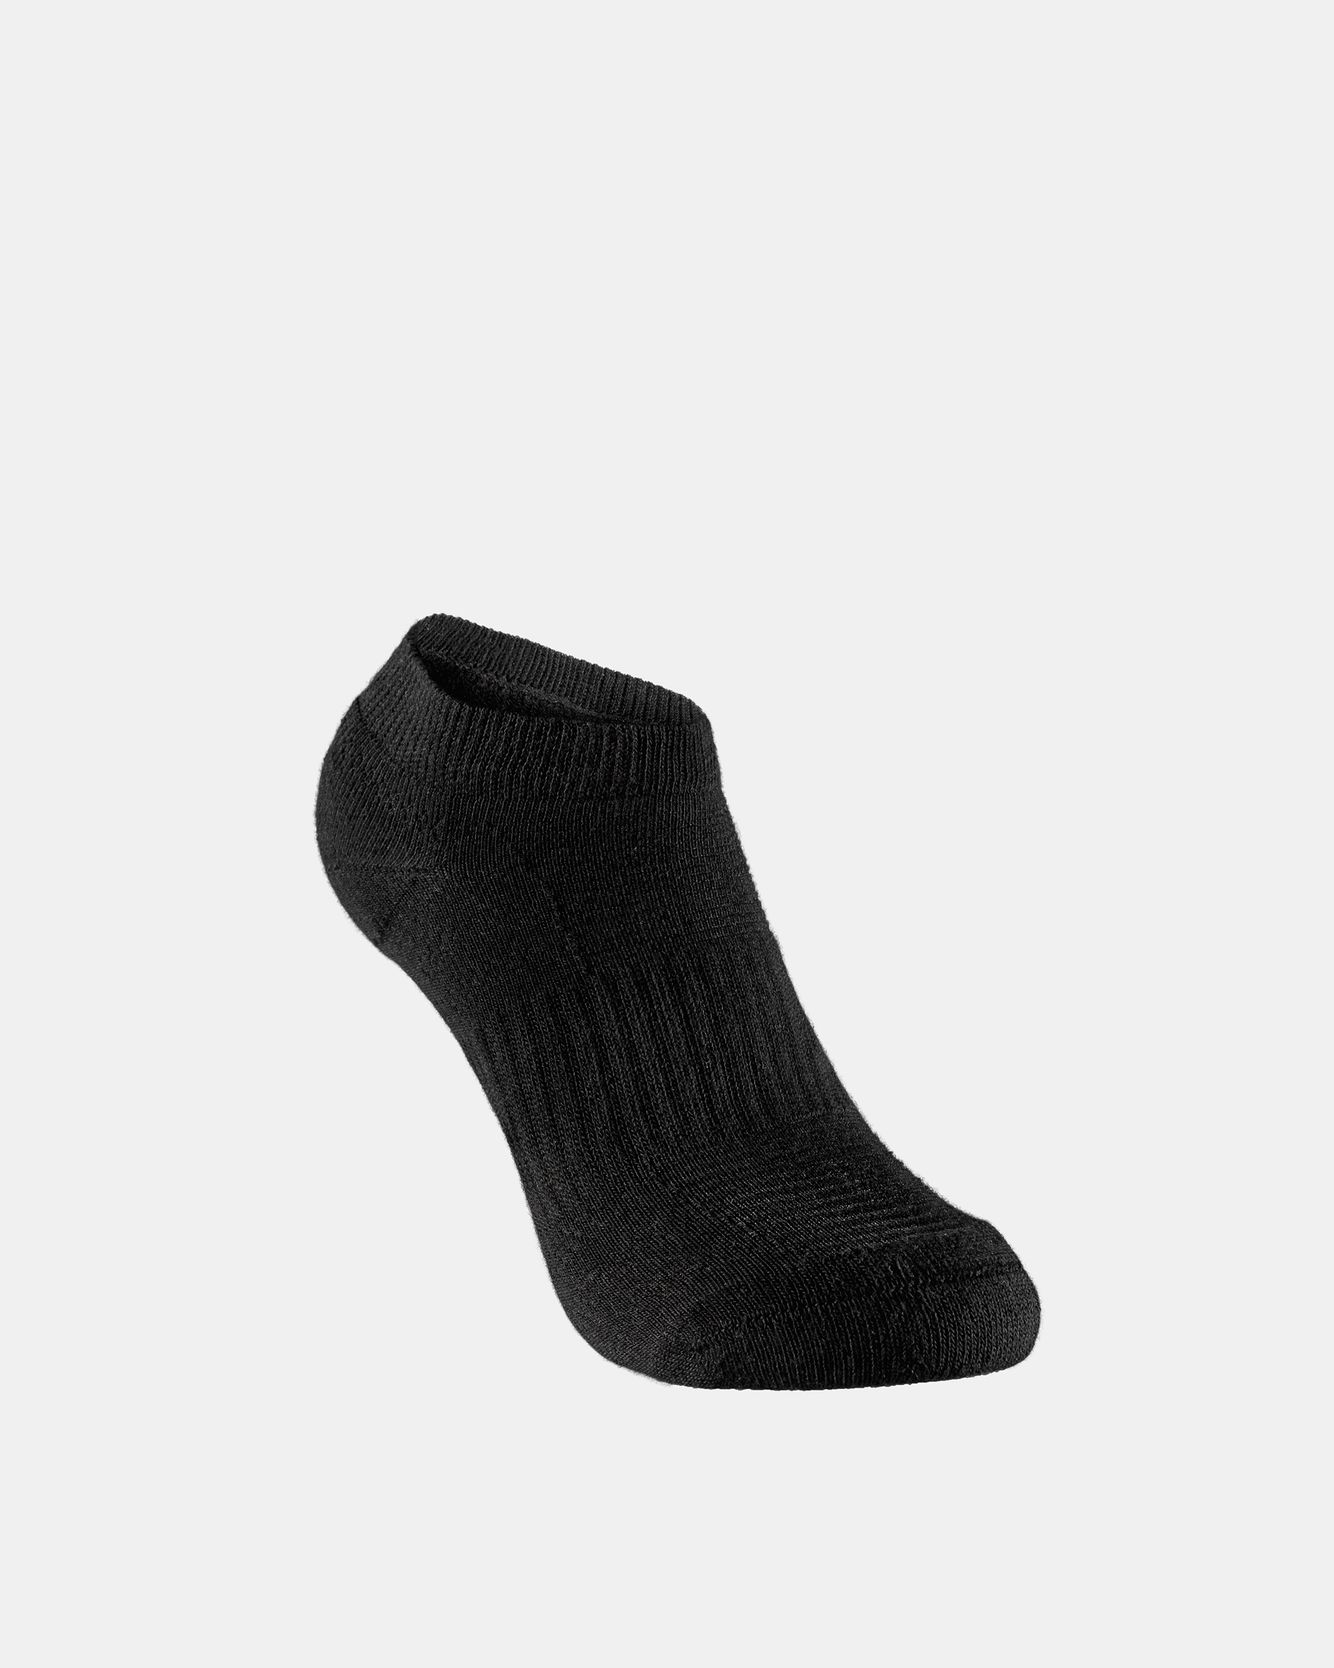 Vilgain Workout Organic Ankle Socks